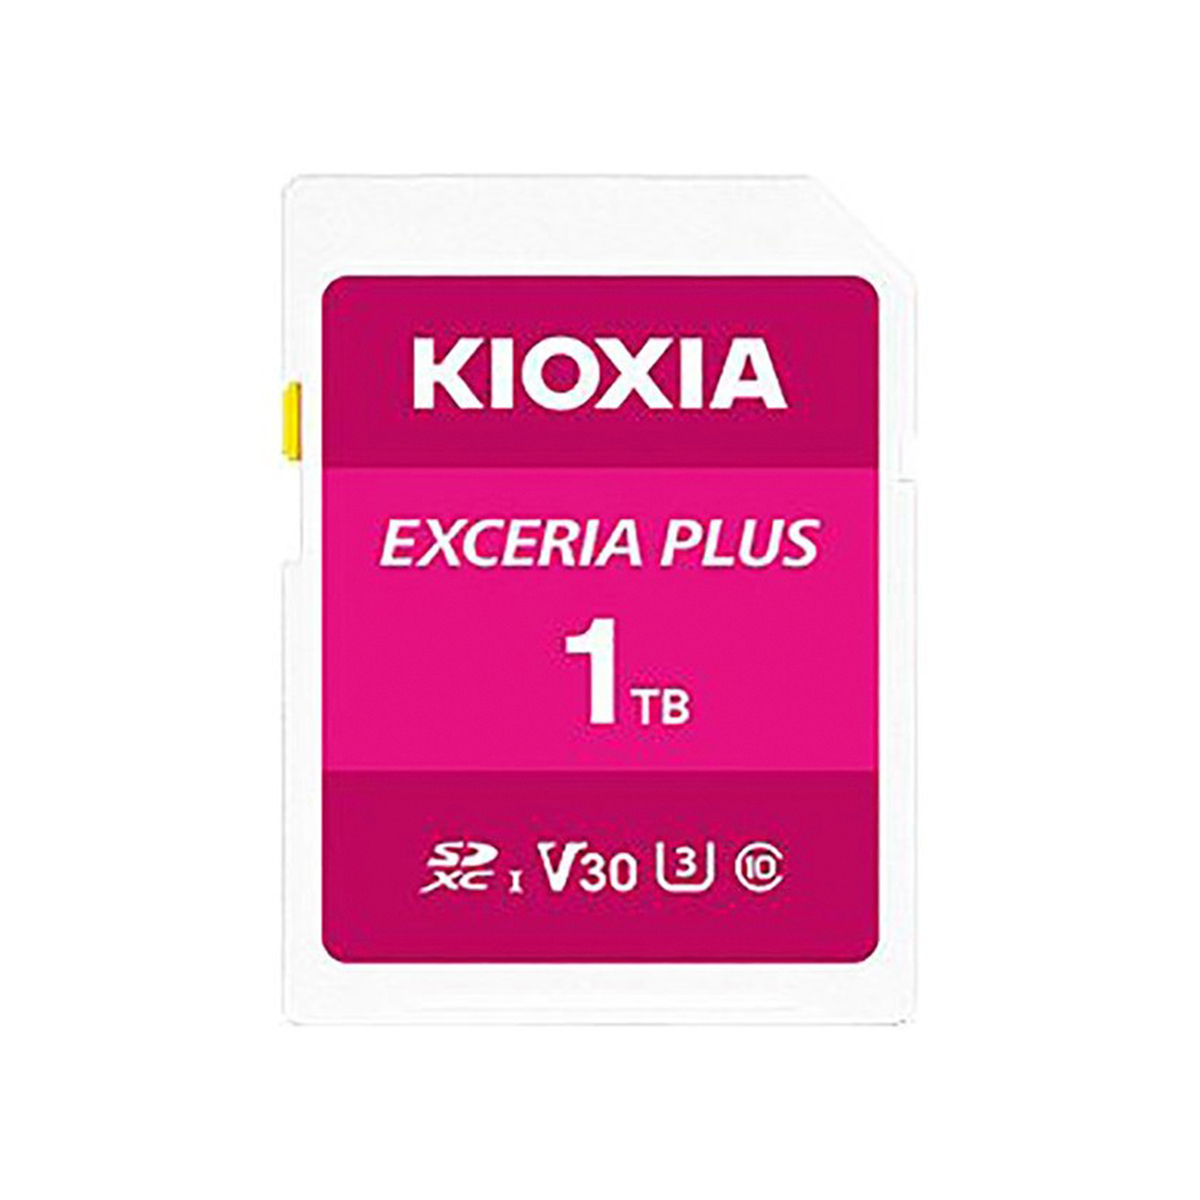 Kioxia Exceria Plus SDXC Card 1TB Rose LNPL1M001TG4